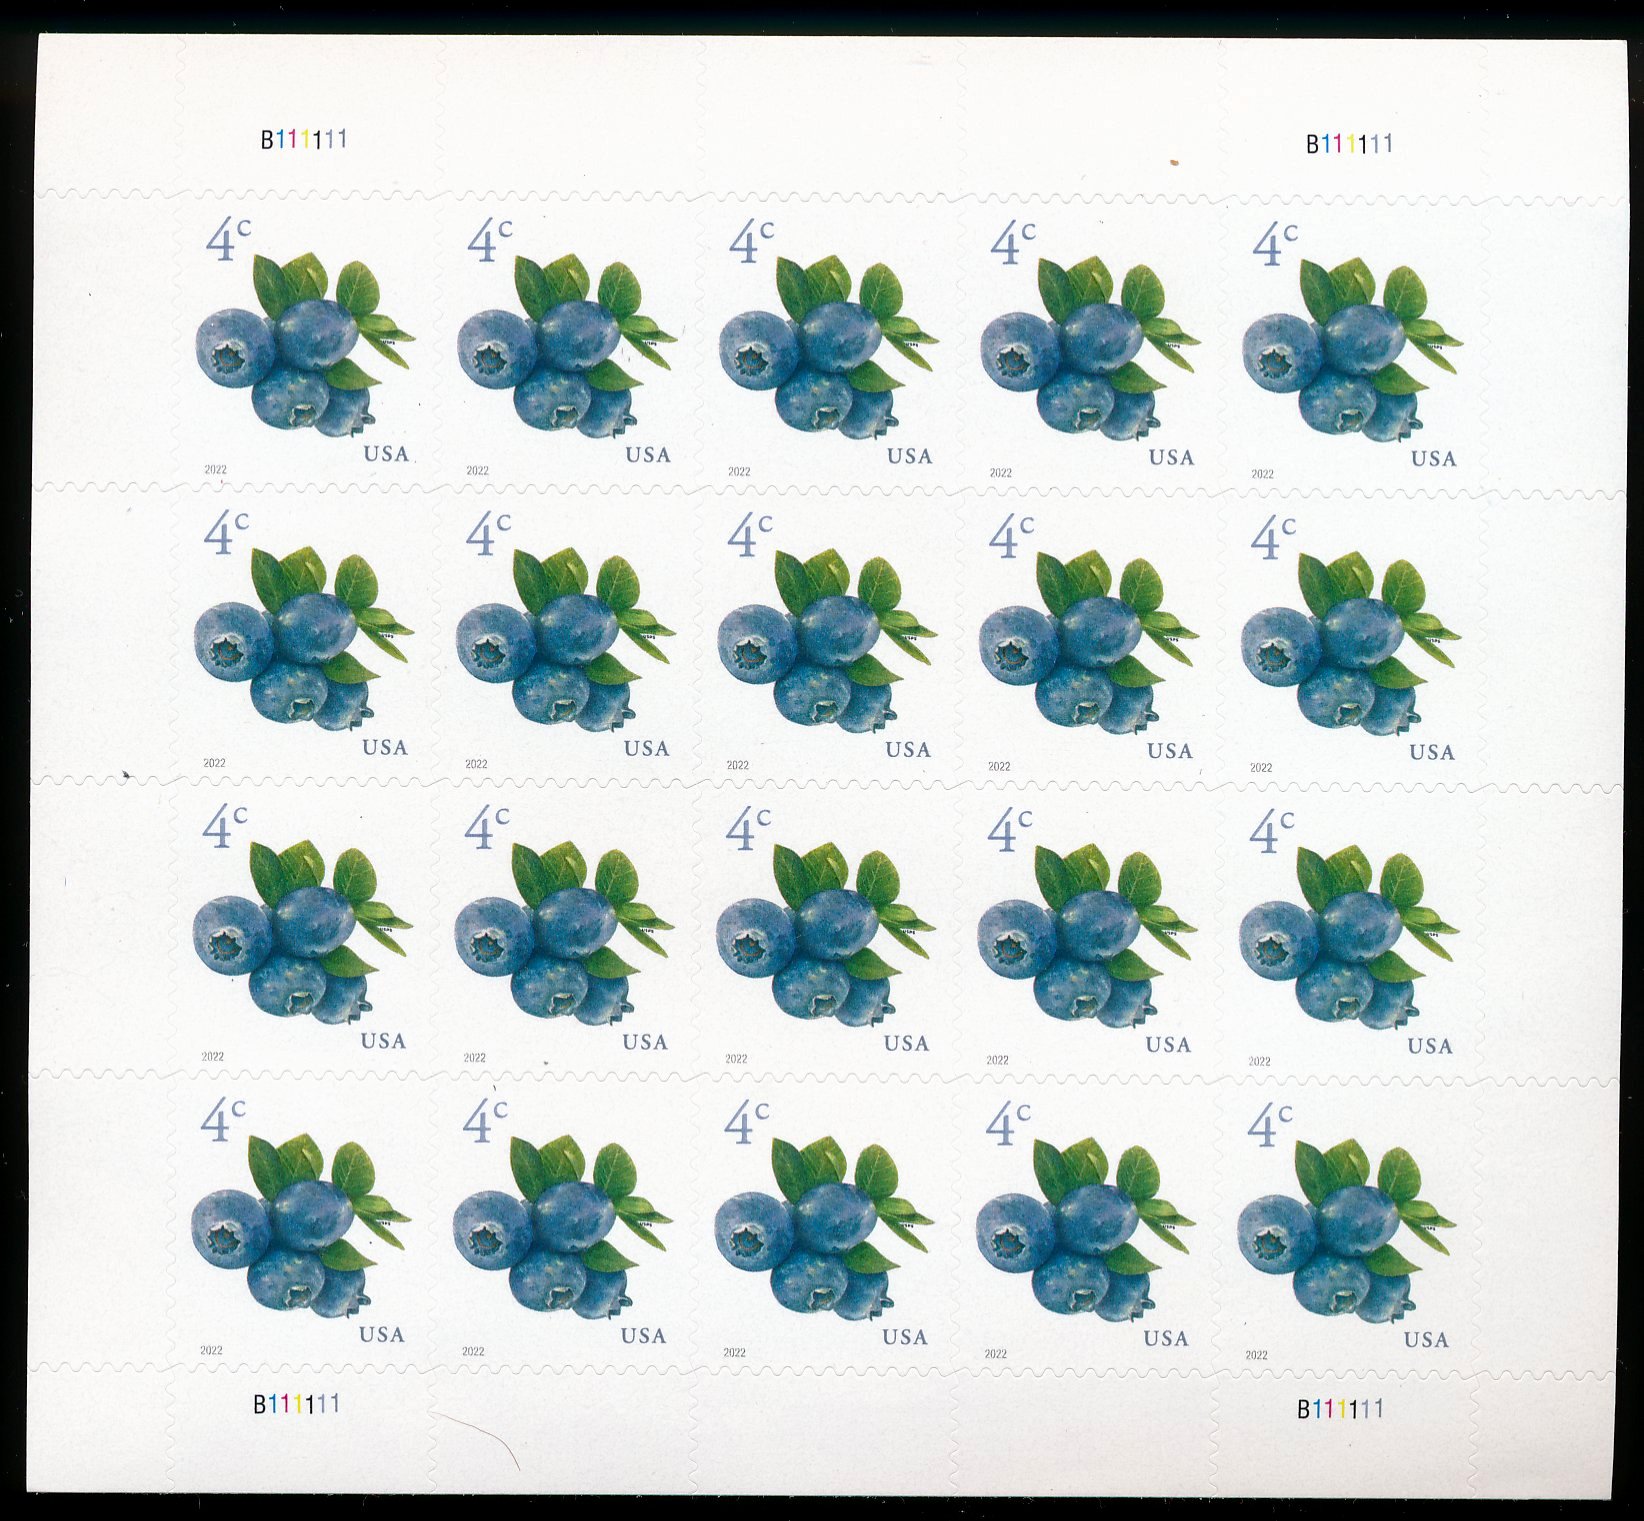 5652sh 4c Blue Berries Mint Sheet of 20 5652sh